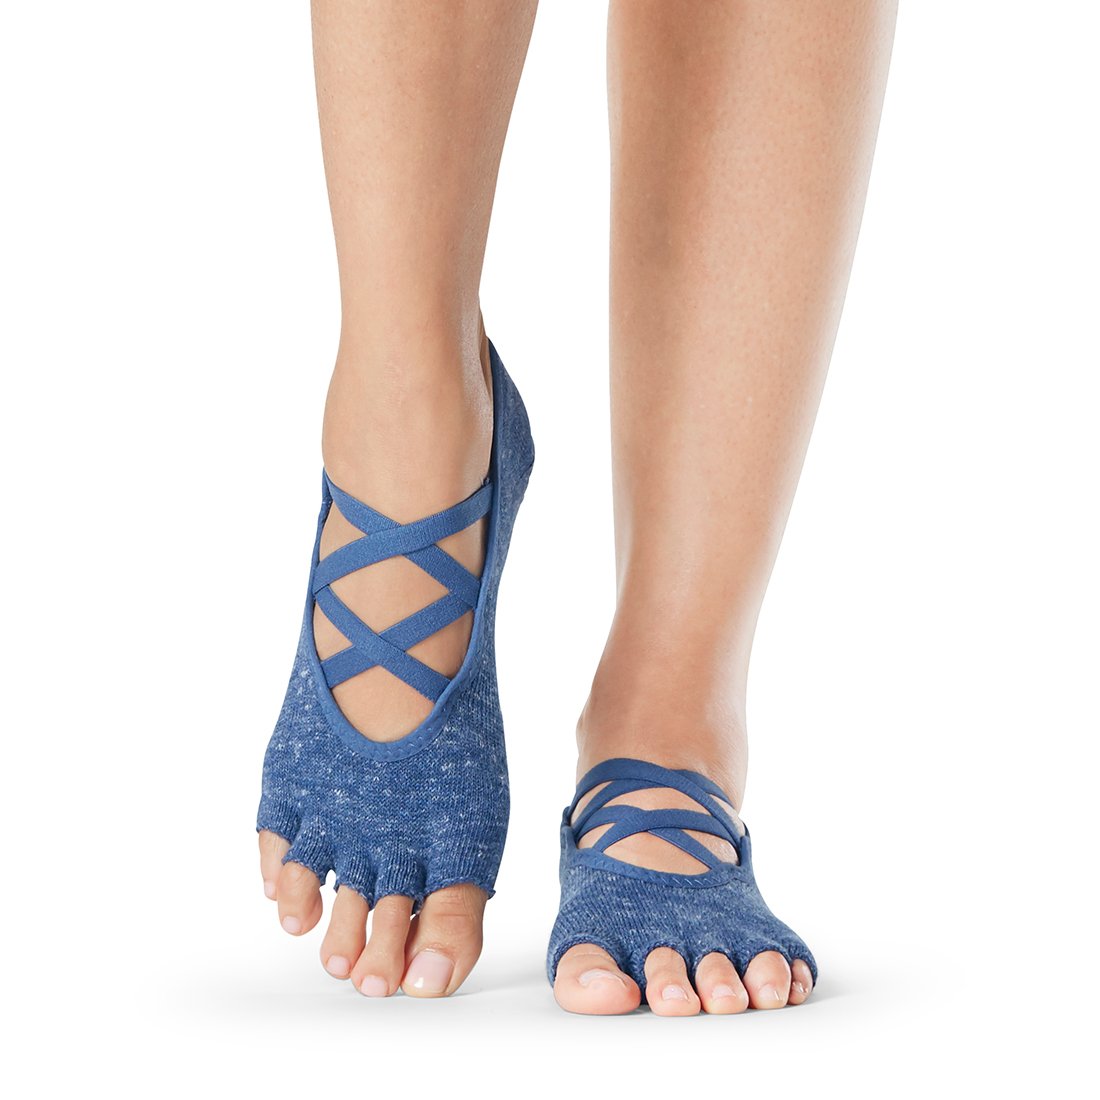 Half Toe Elle in Be Mine Grip Socks - ToeSox - Mad-HQ